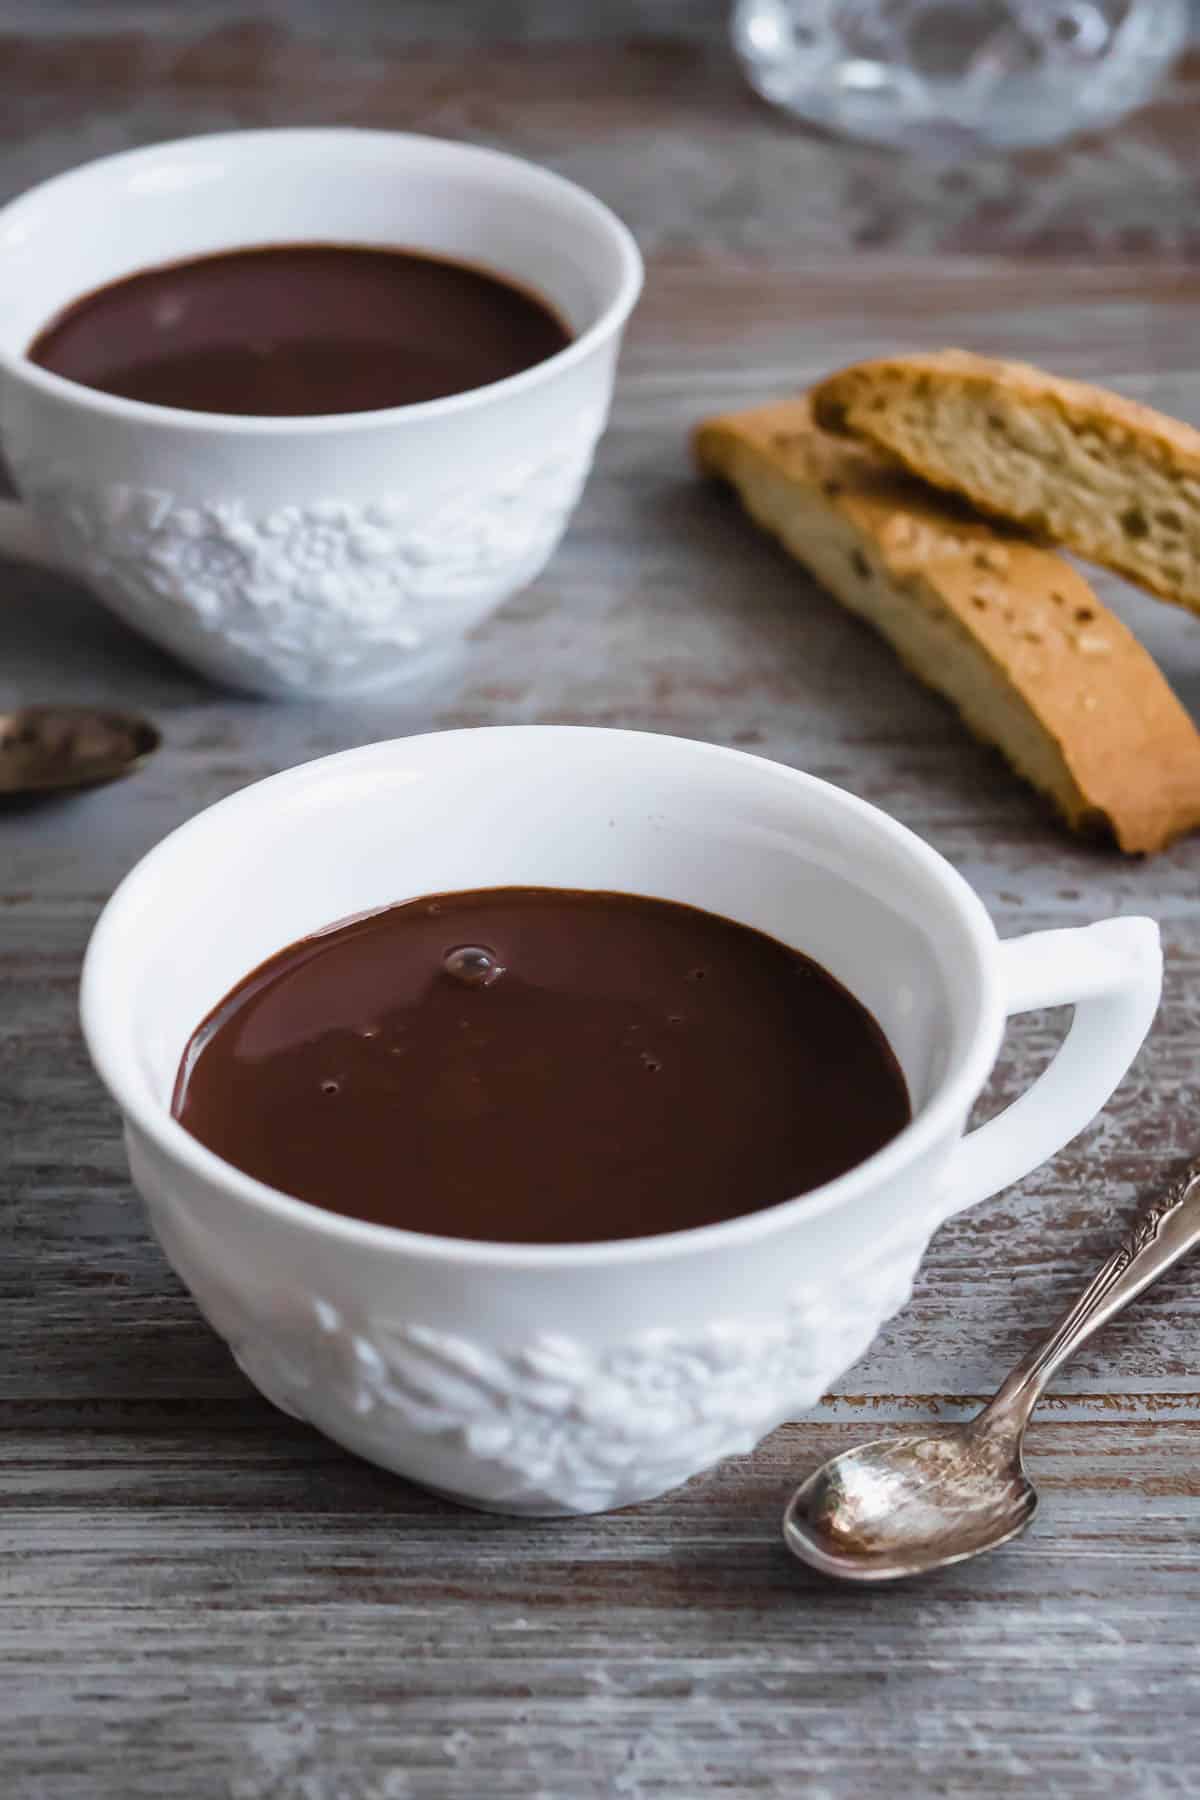 https://www.themediterraneandish.com/wp-content/uploads/2022/12/hot-chocolate-recipe-FINAL-4.jpg